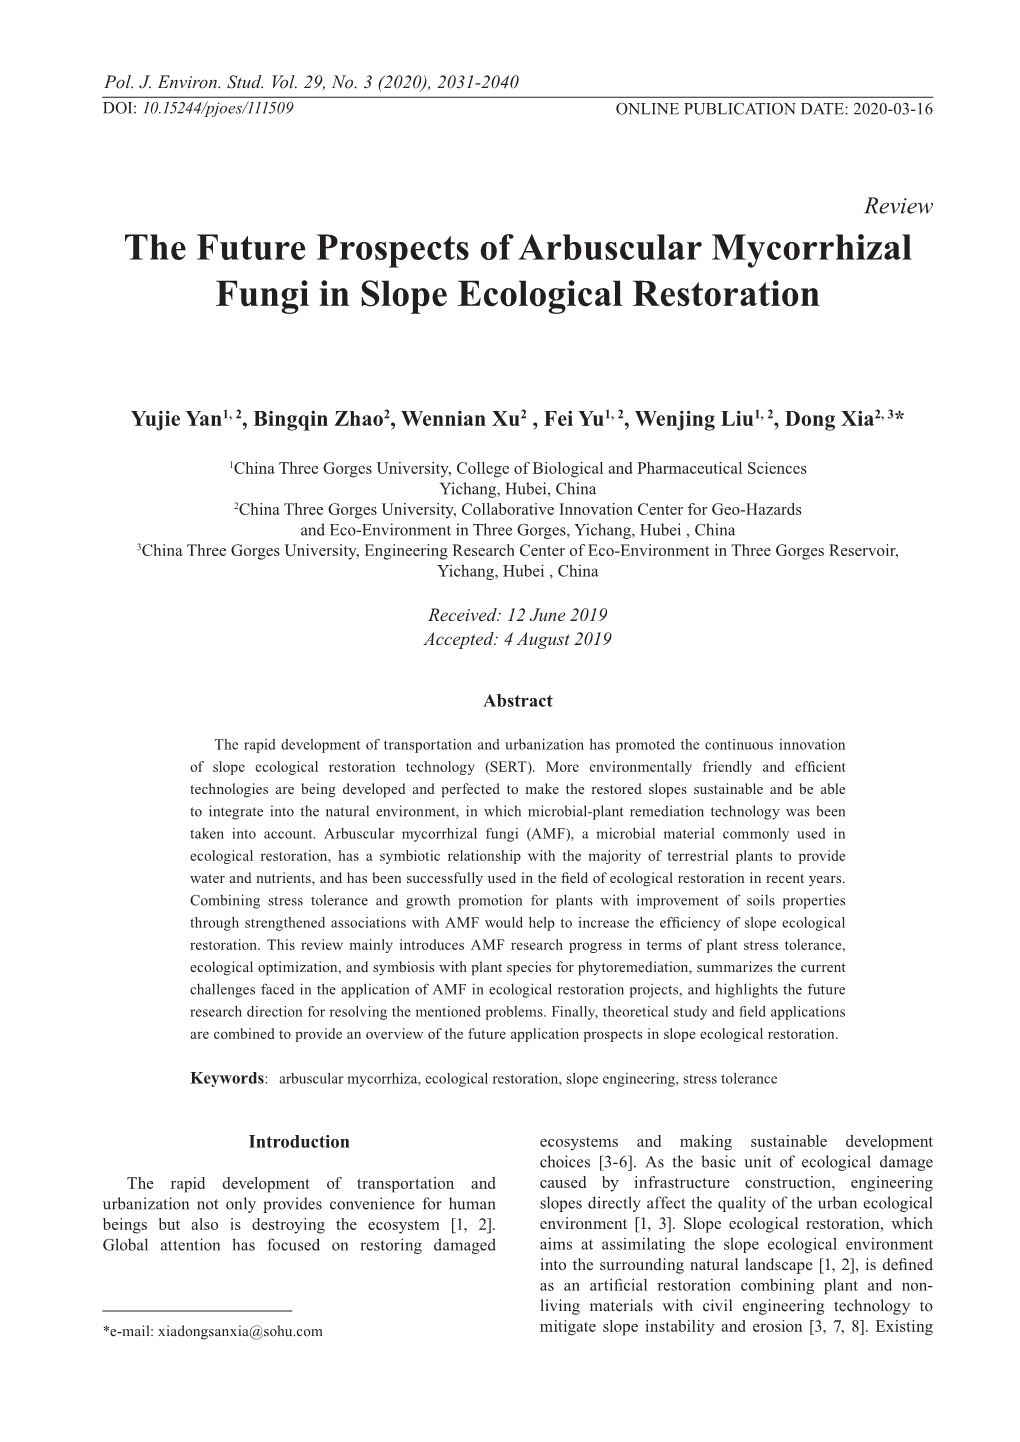 The Future Prospects of Arbuscular Mycorrhizal Fungi in Slope Ecological Restoration